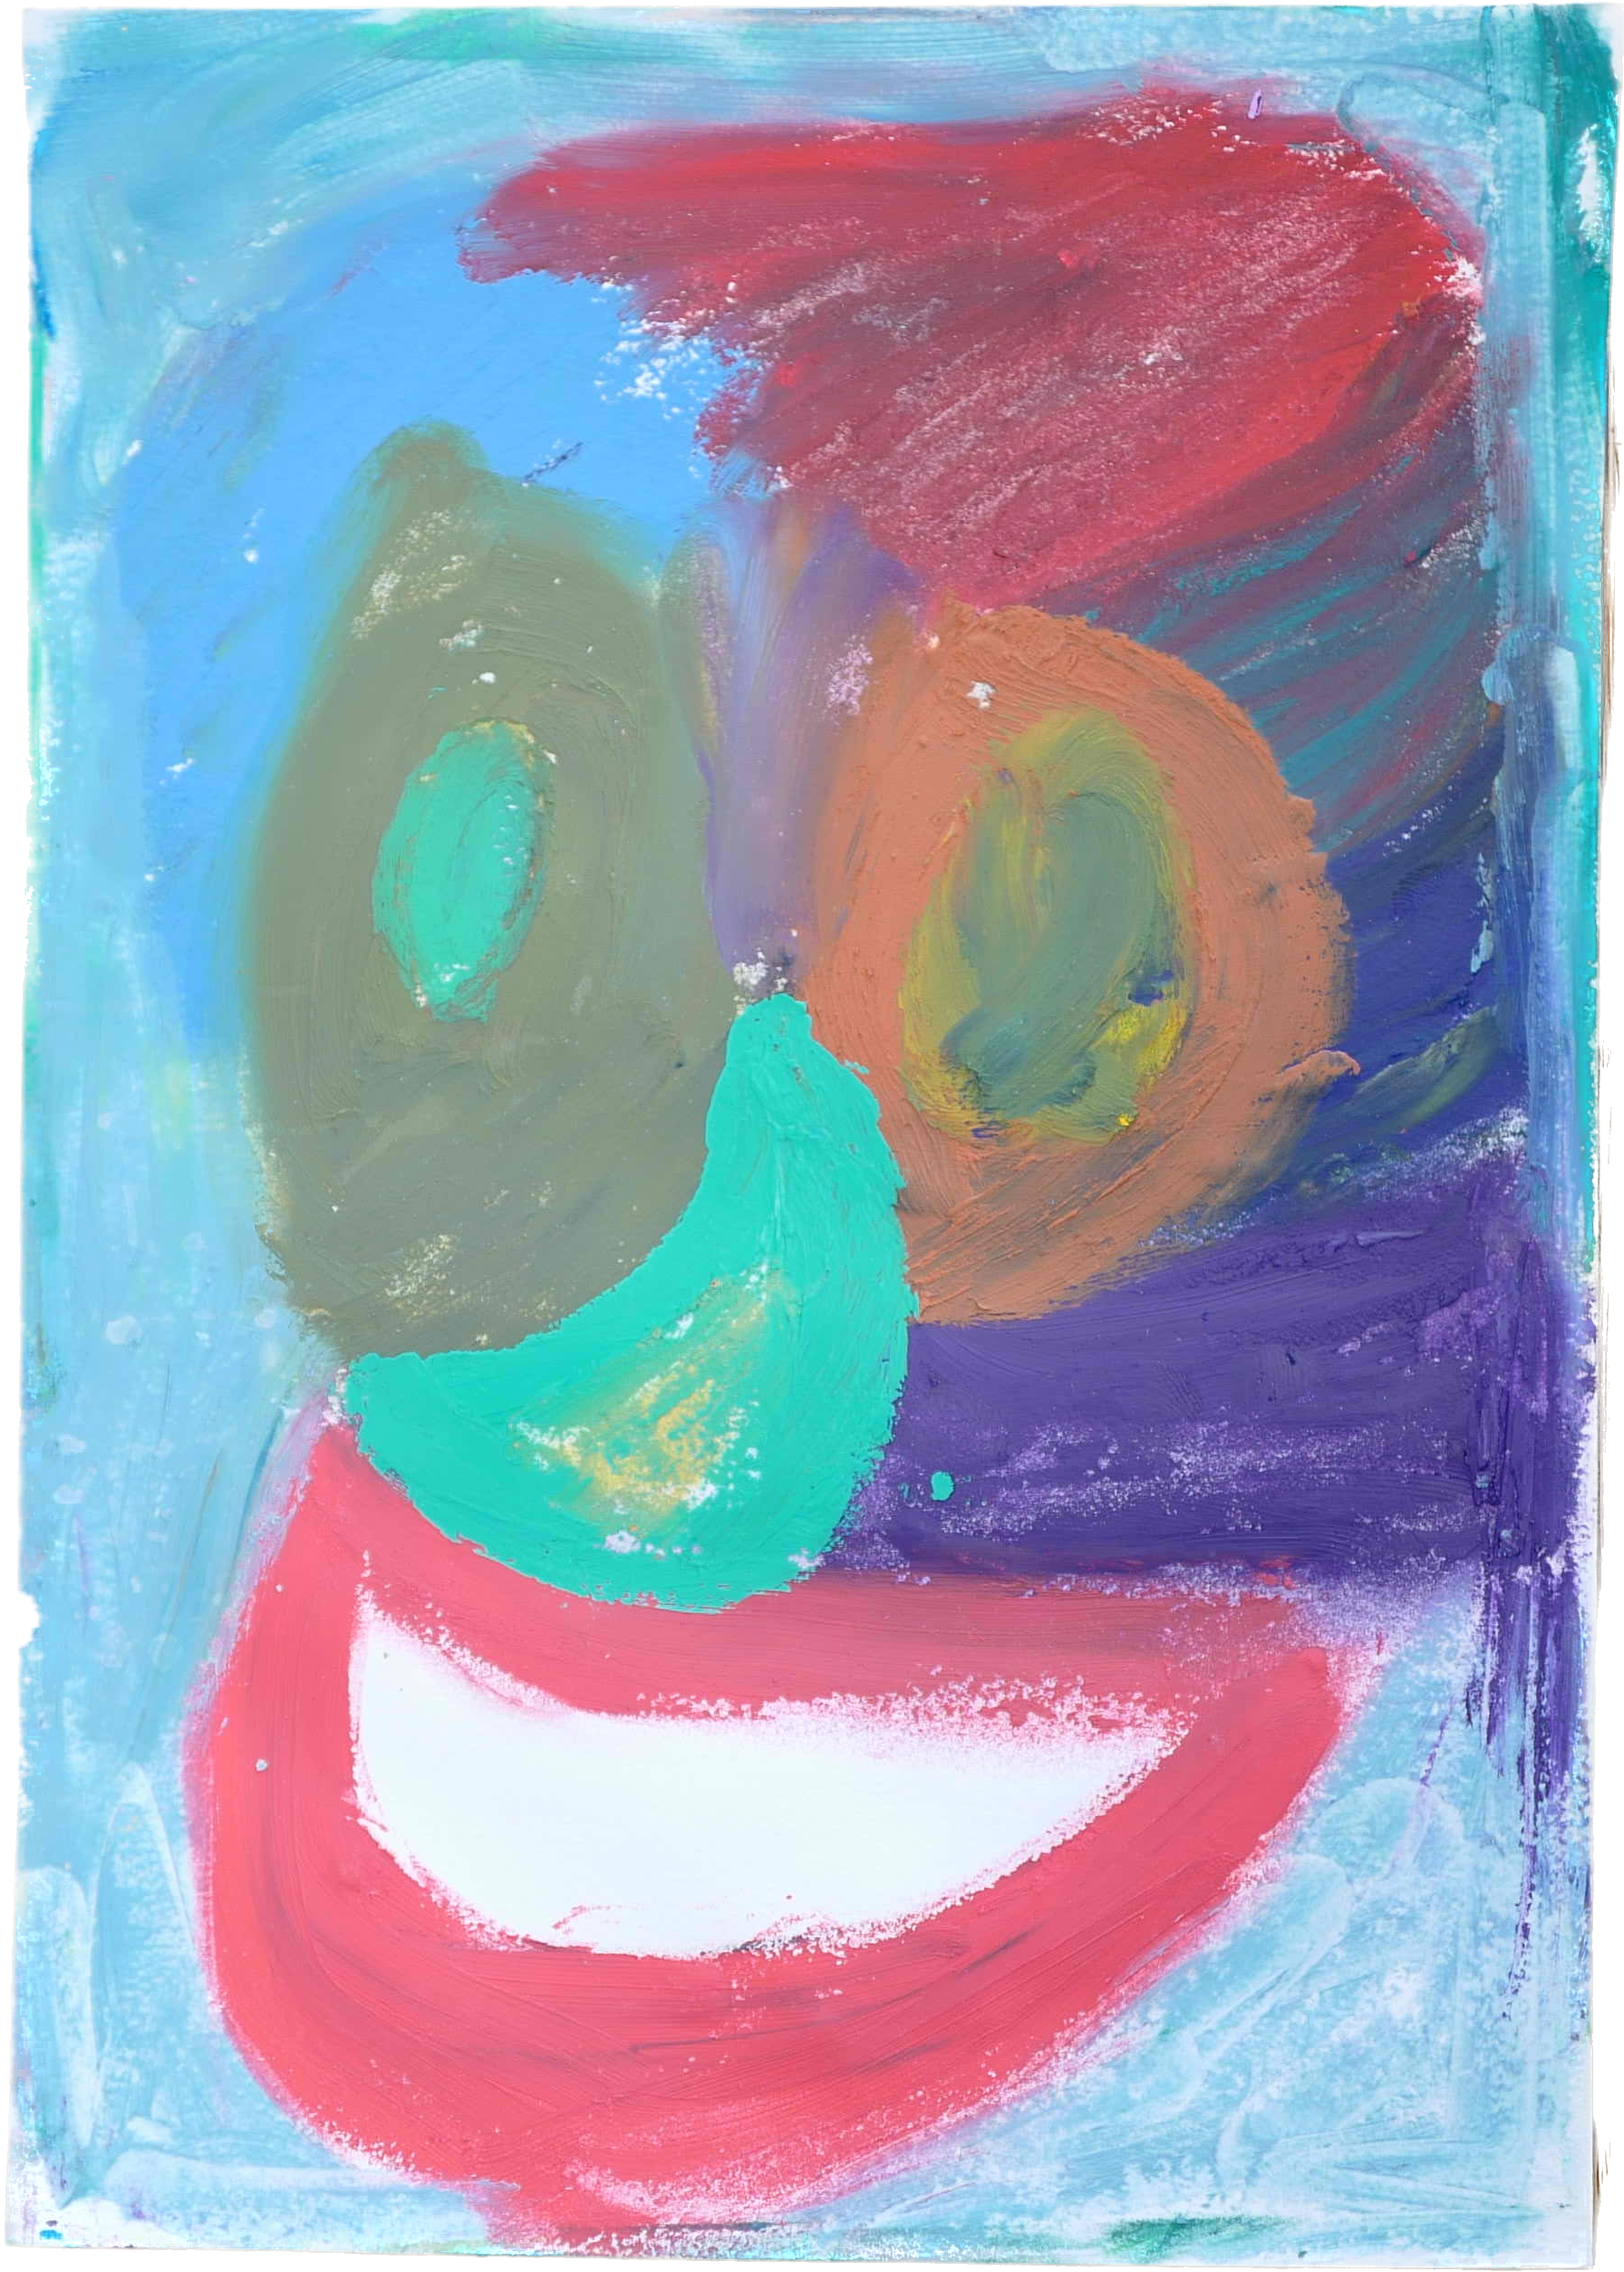 "Lenfantvivant abstract color harmony" "Oil pastel spectrum abstraction" "Vibrant Sauna Fusion Art piece" "Abstract art with central crimson accent" "Lenfantvivant No. 151 dynamic colors"